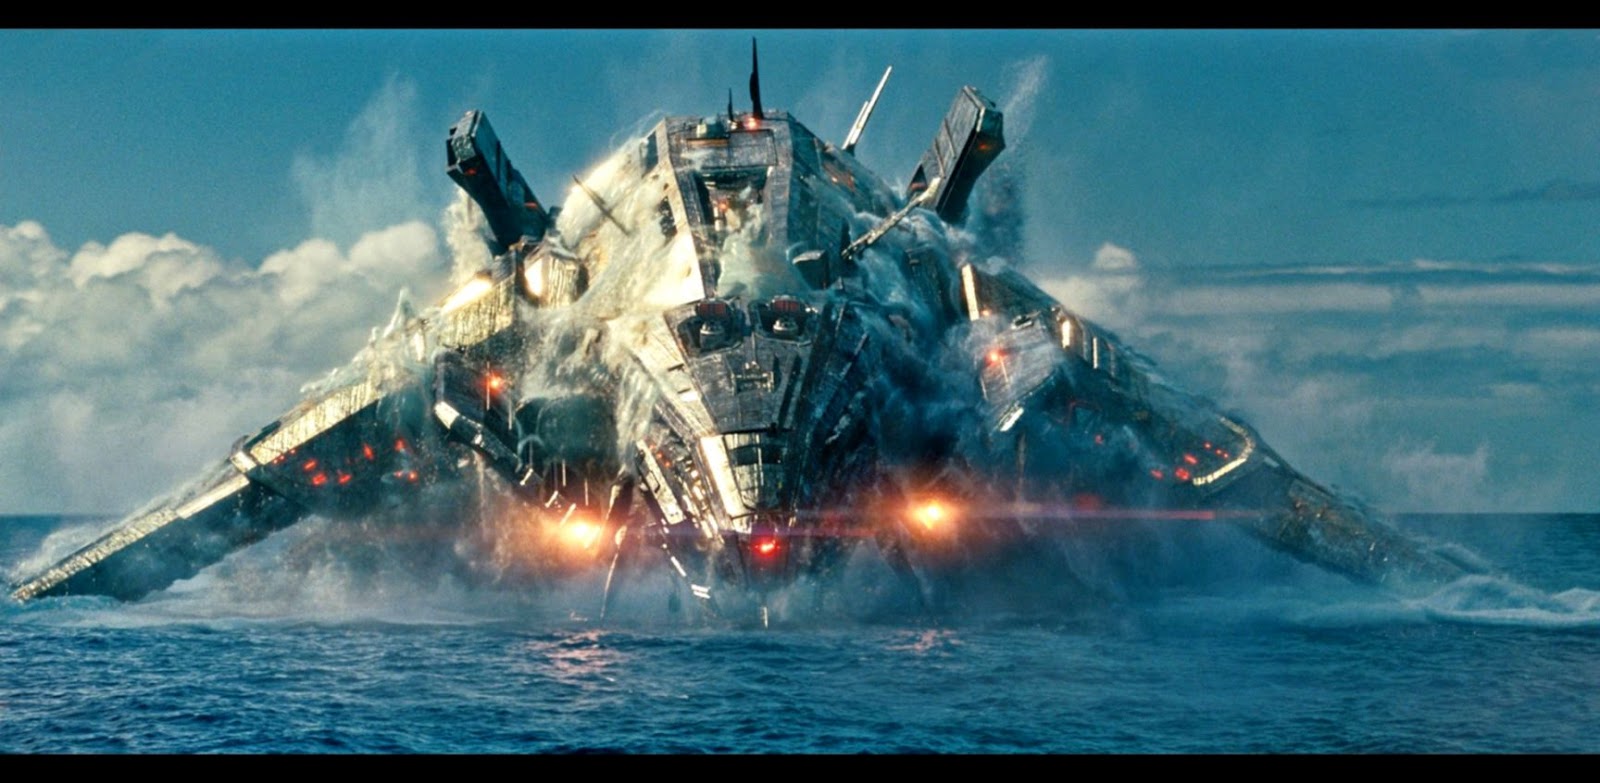 Battleship Wallpaper And Background Image Id239722 - Battleship Movie Alien Ship - HD Wallpaper 